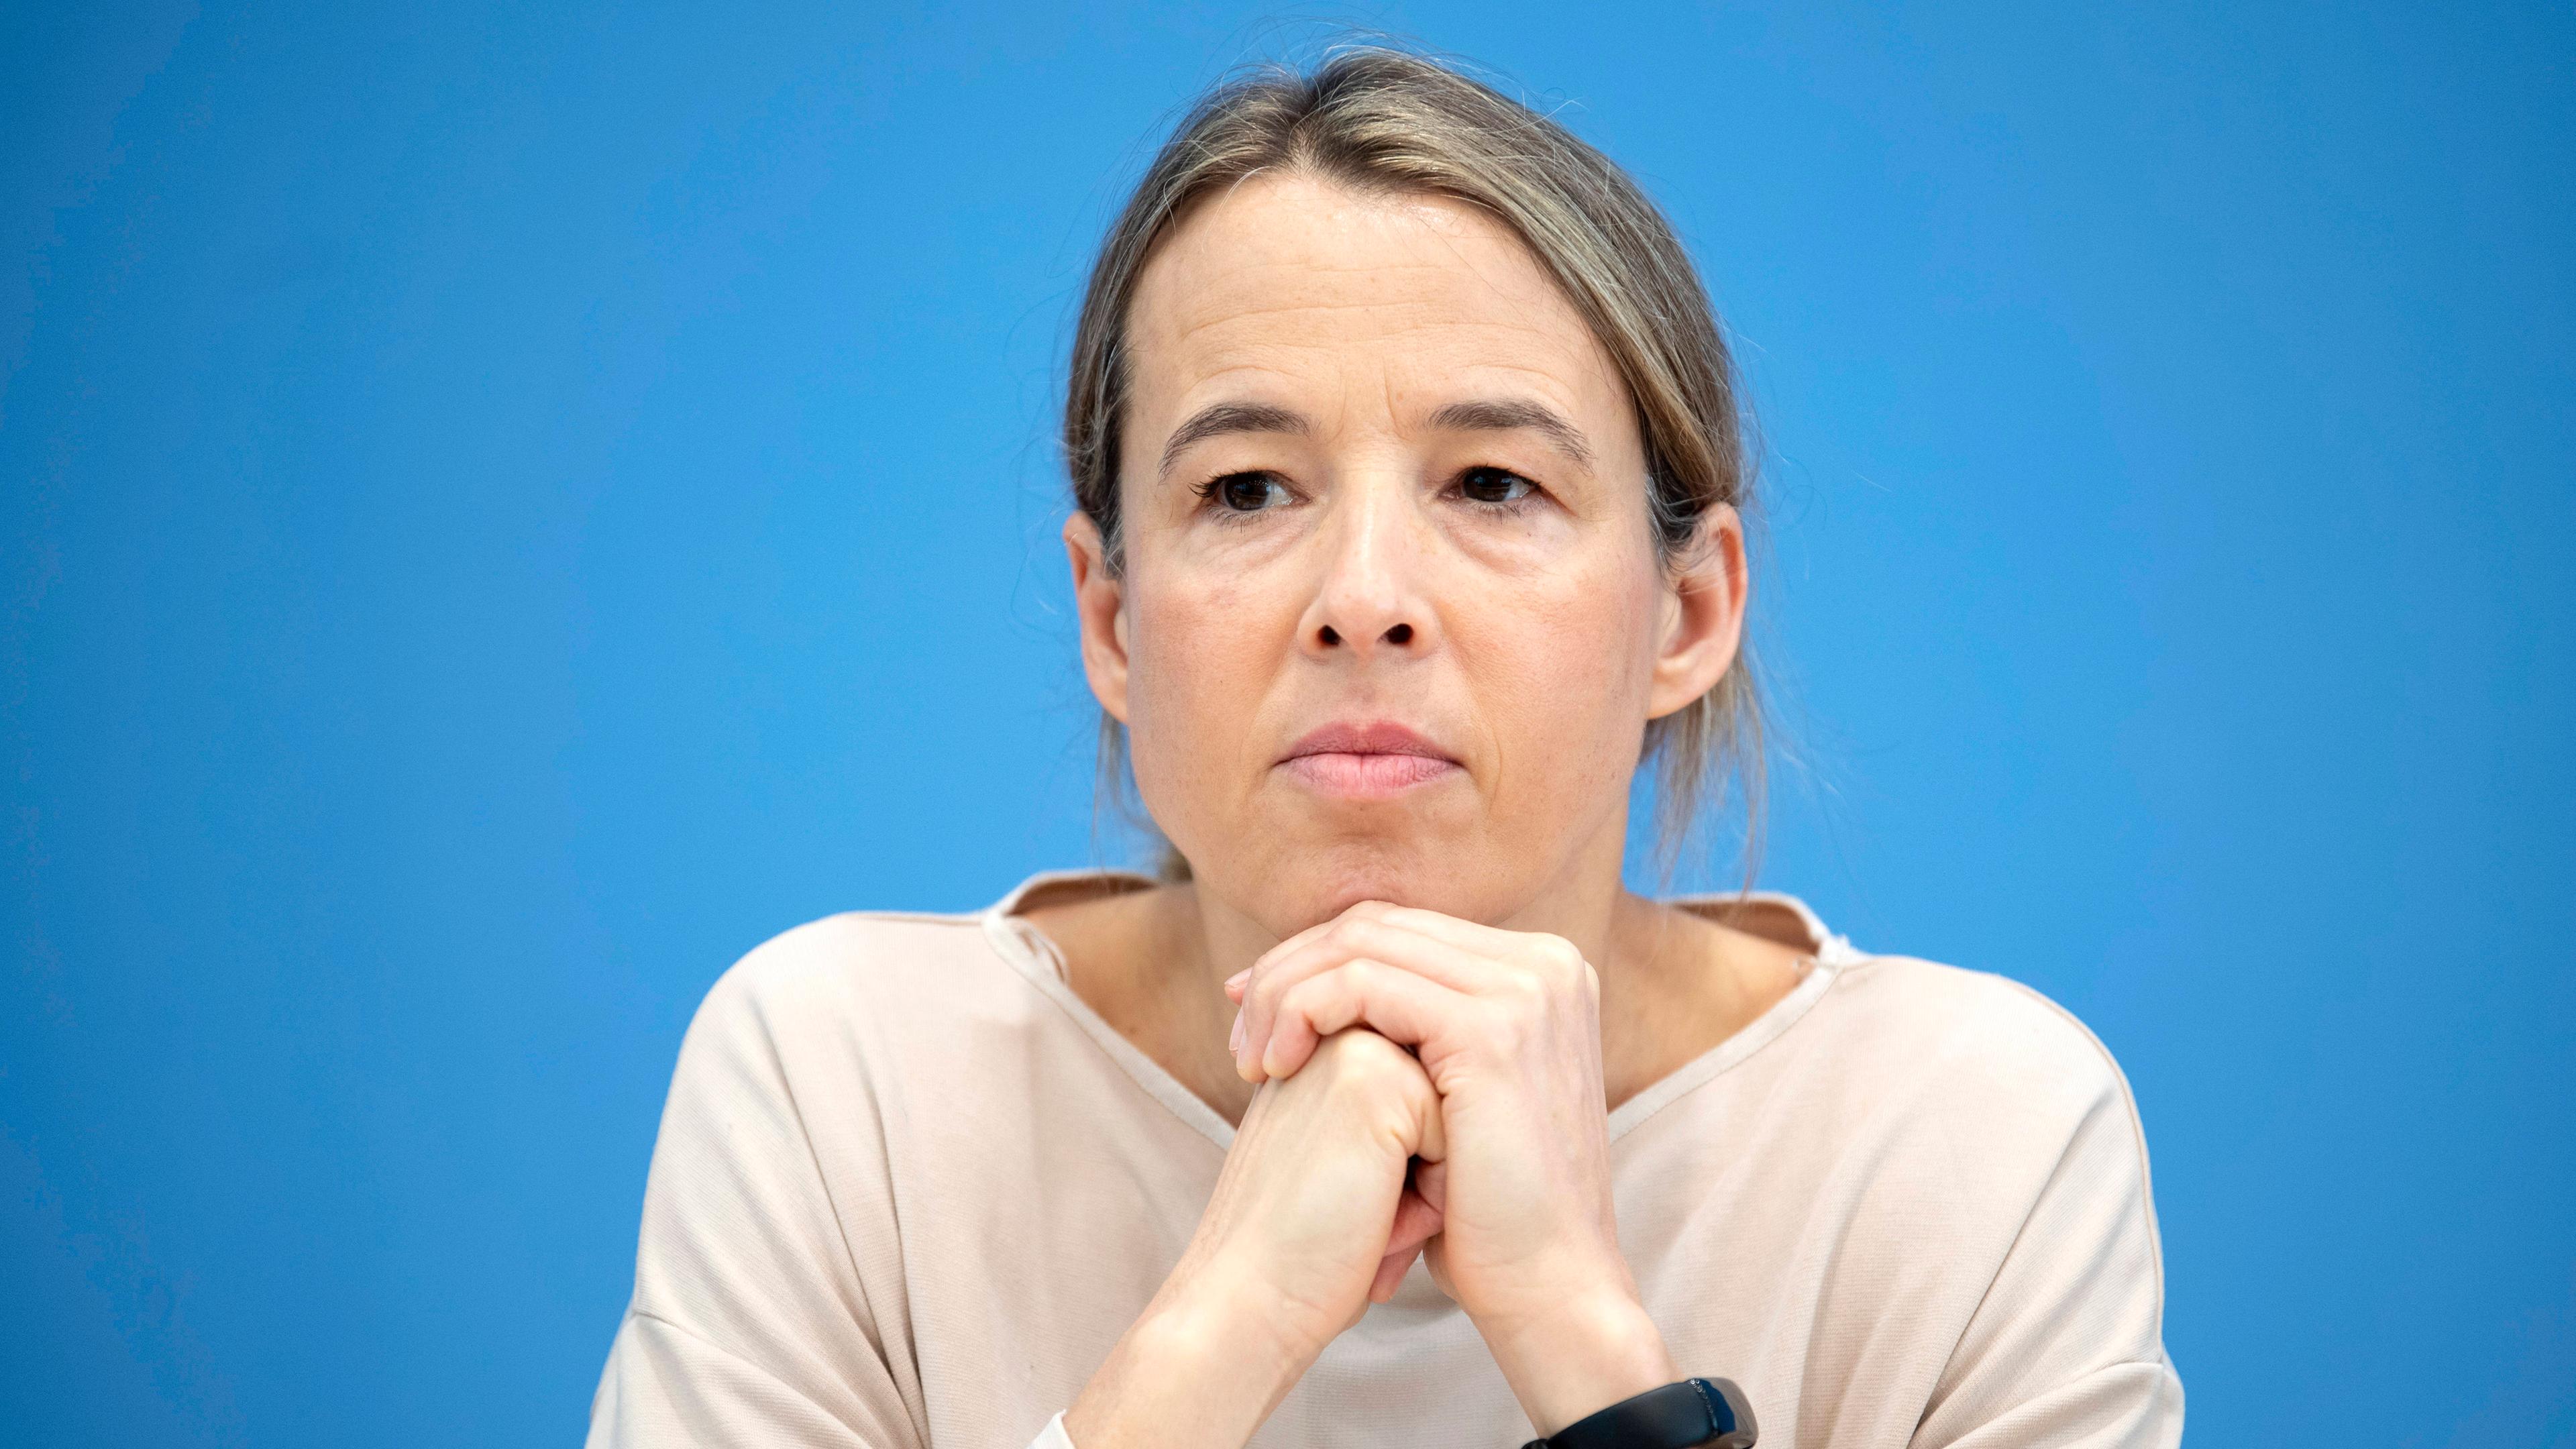 Prof. Ulrike Malmendier